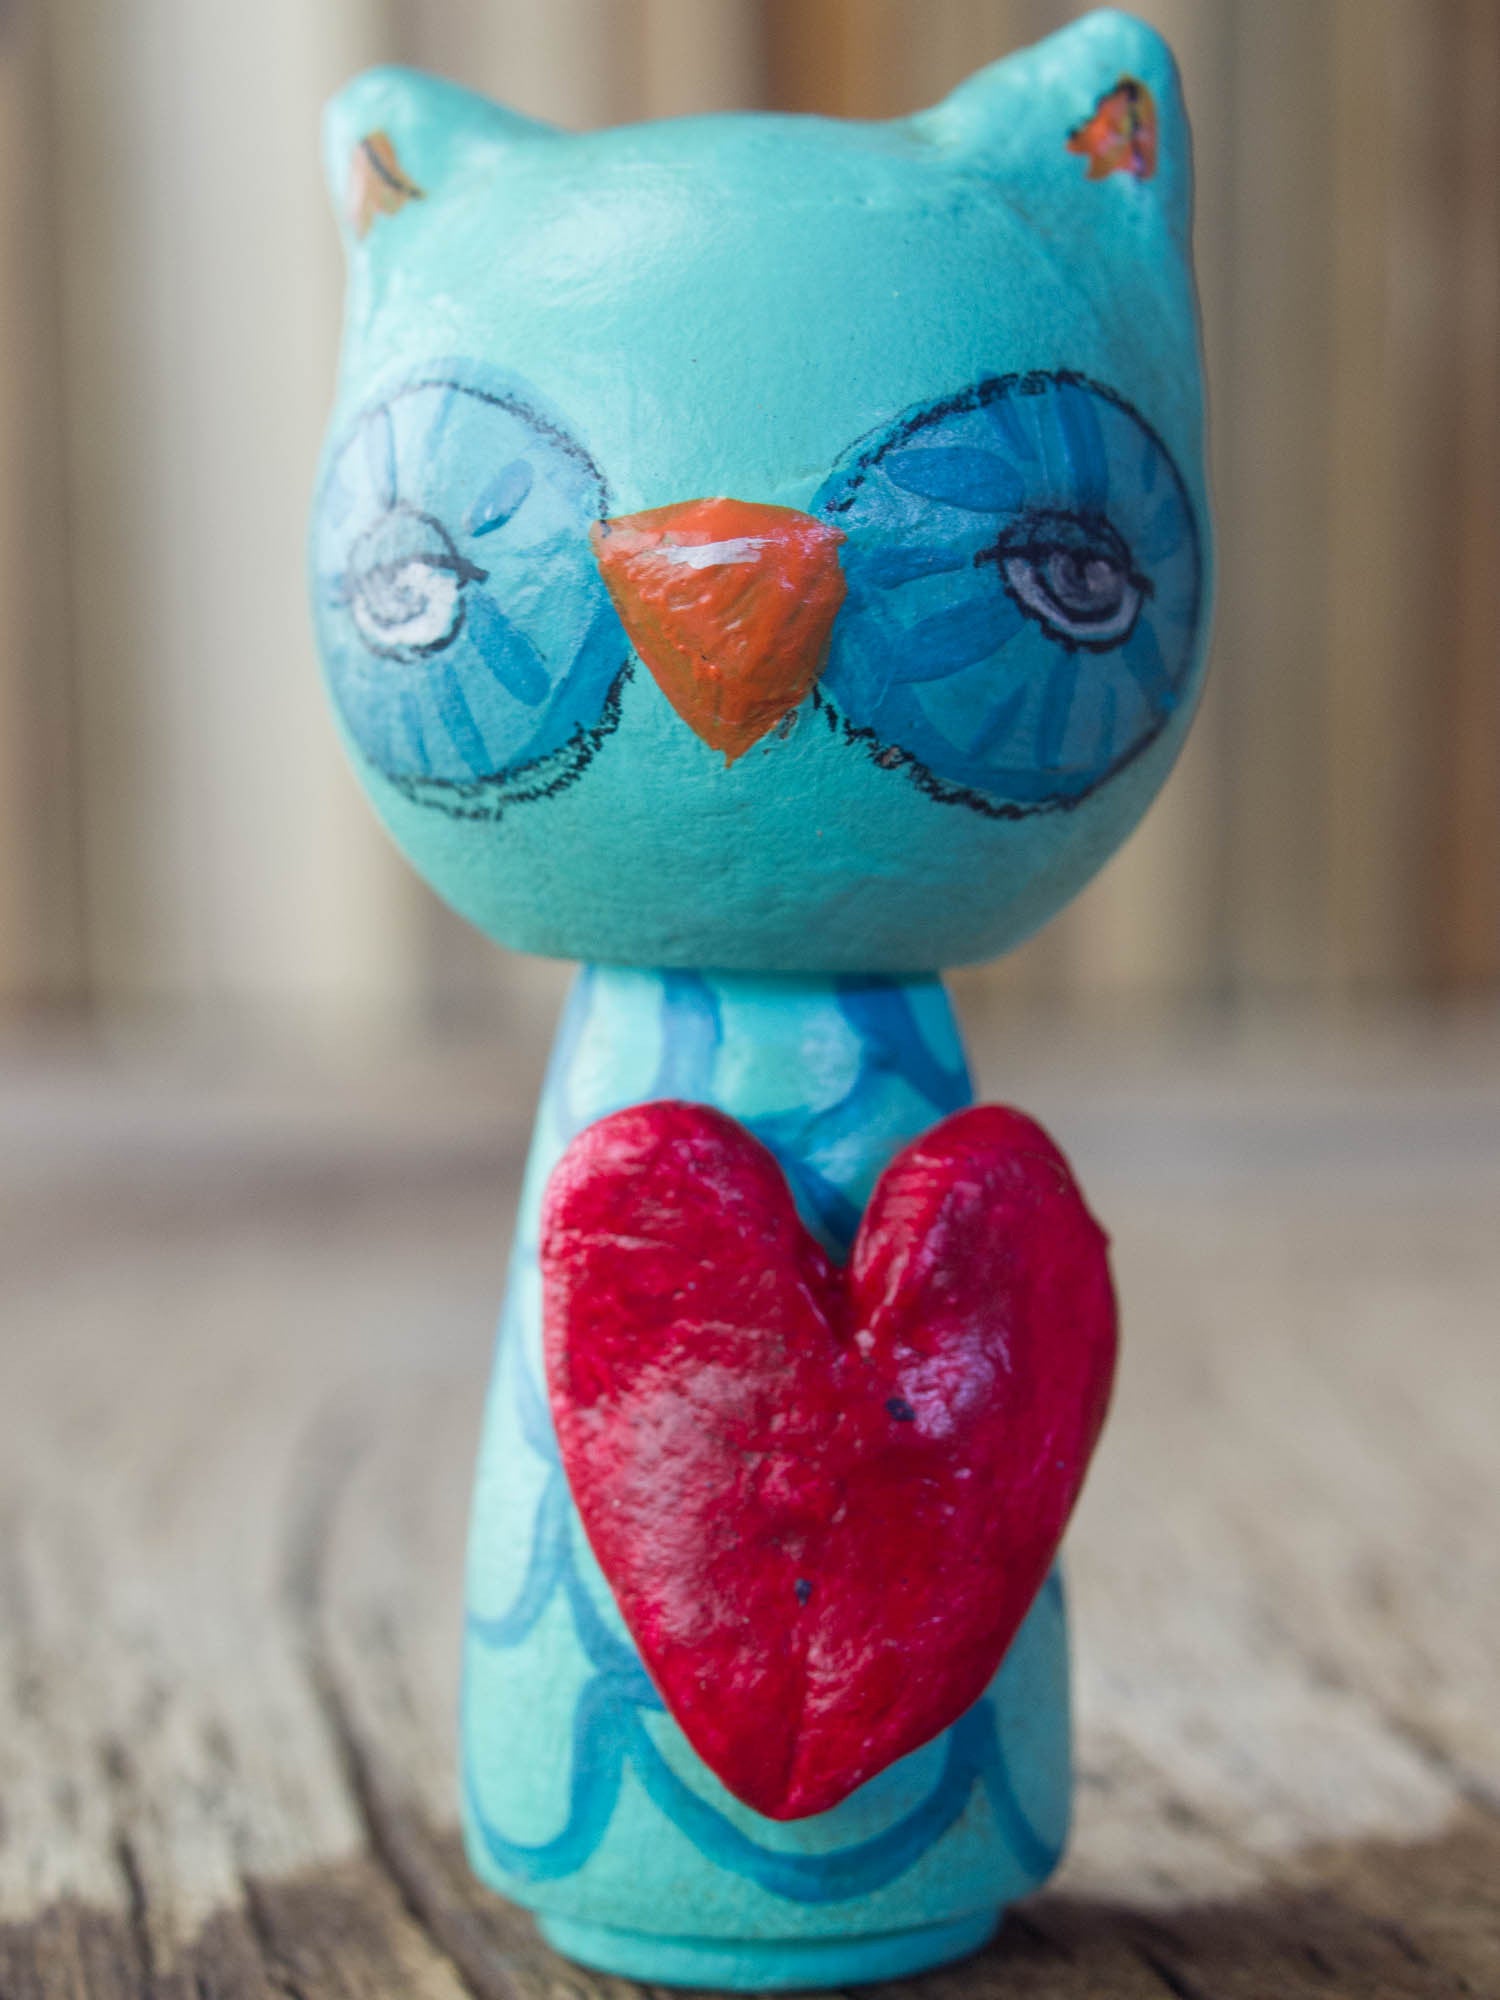 A beautiful owl woodland creature kokeshi art doll, handmade by Danita Art.